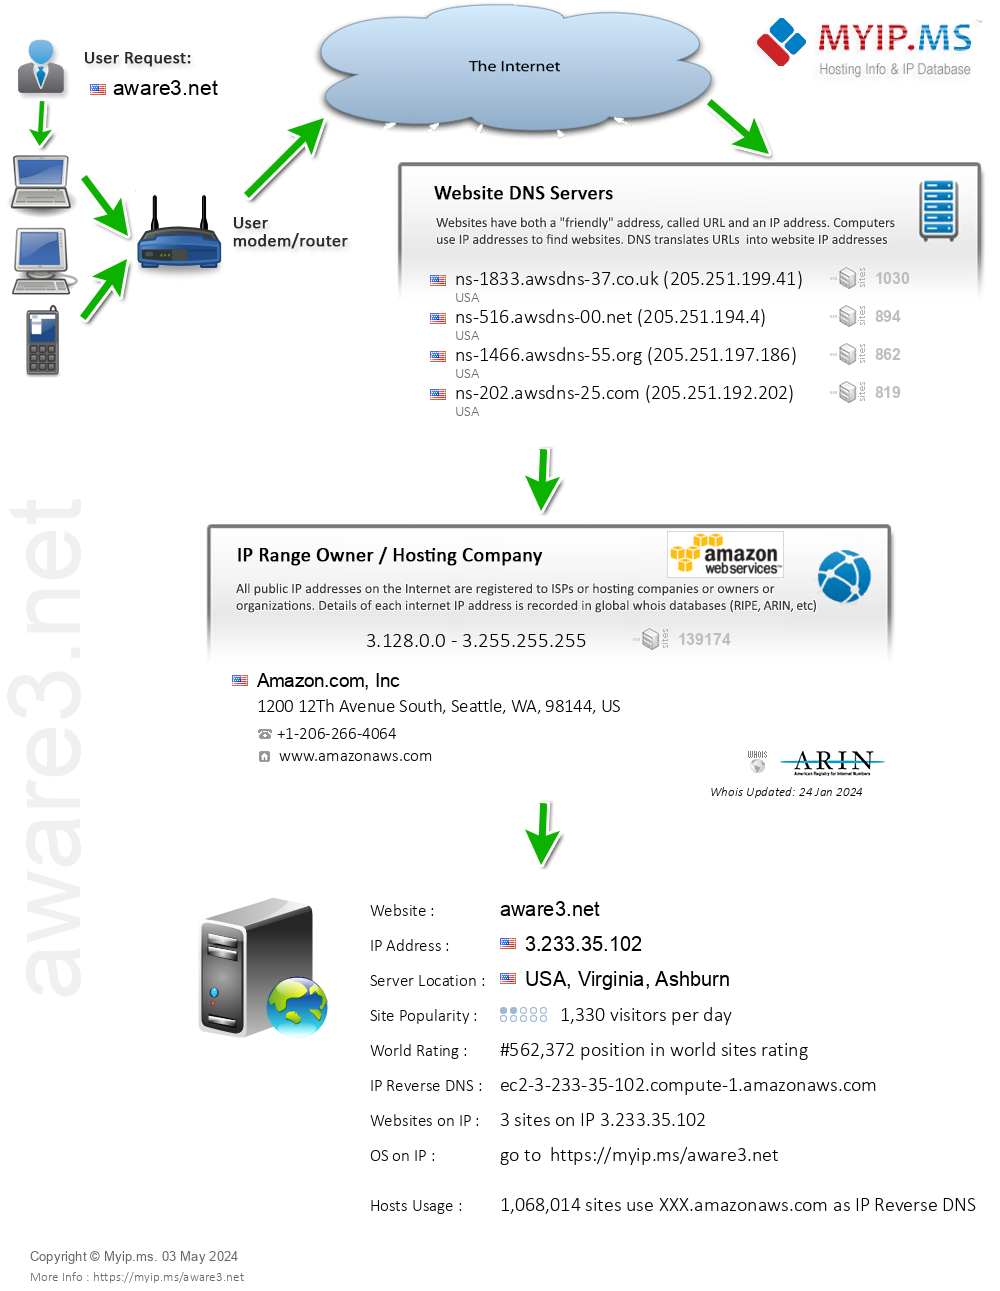 Aware3.net - Website Hosting Visual IP Diagram